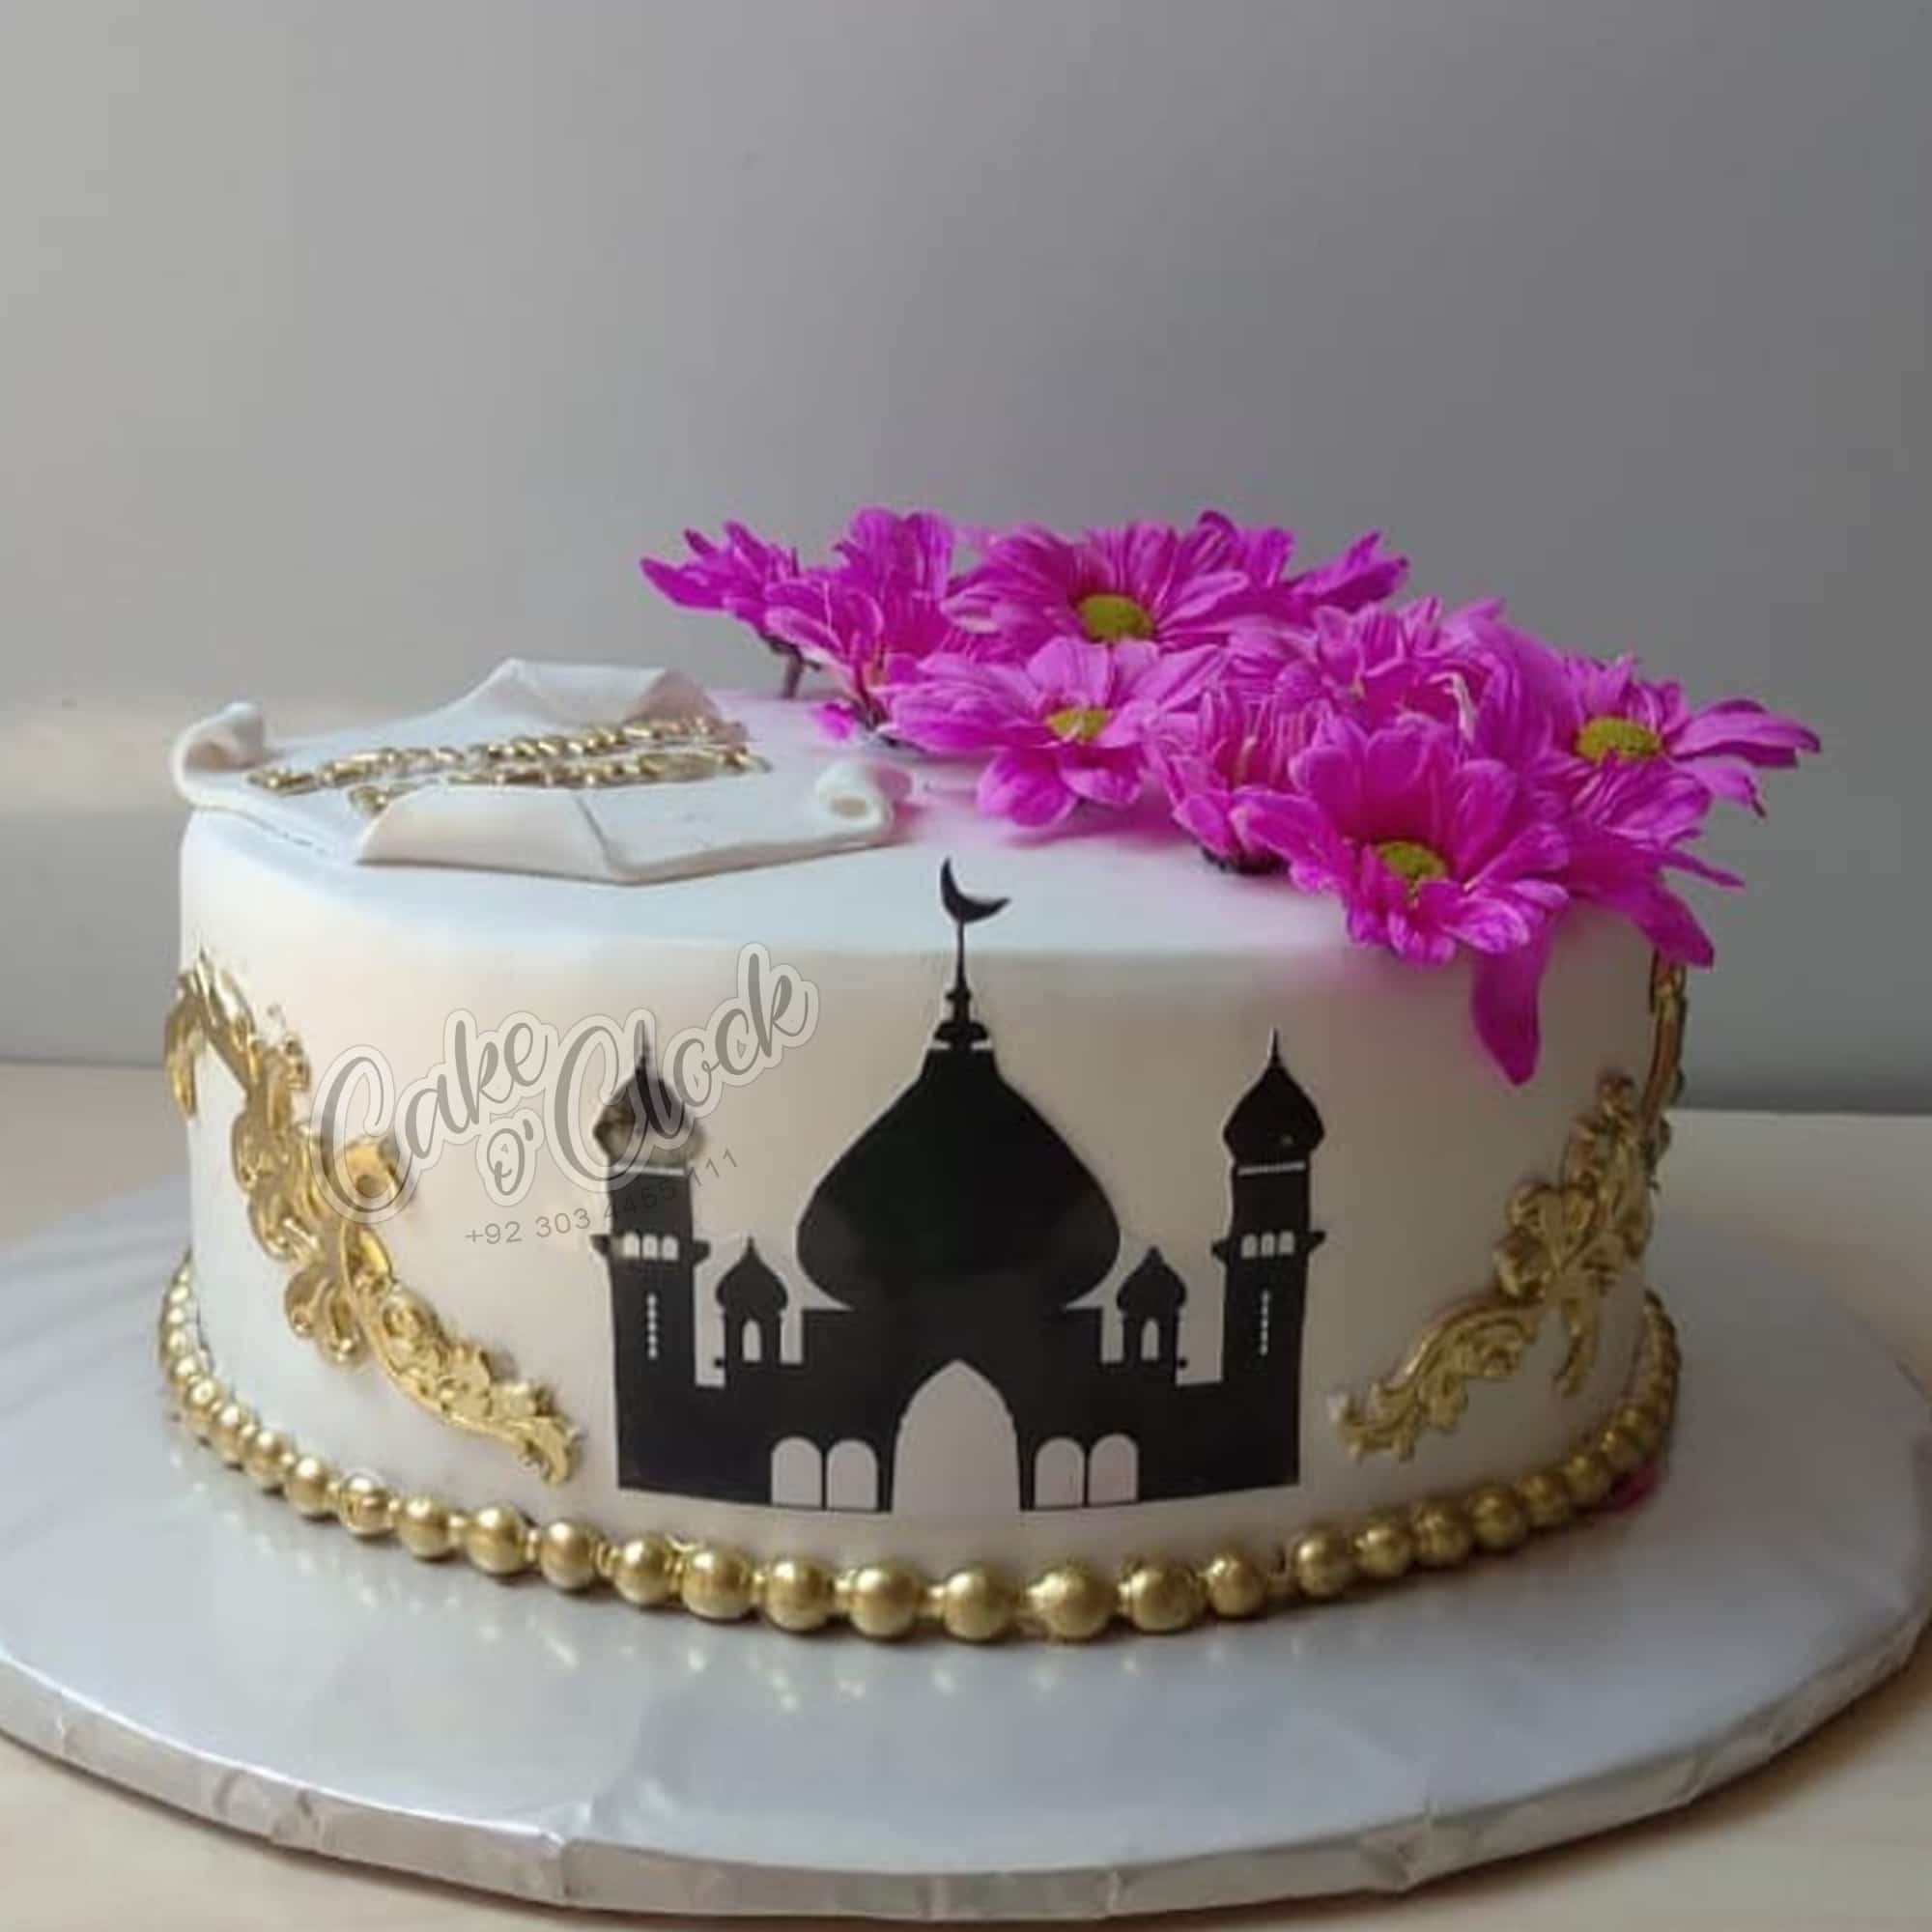 Our Wedding Cake Event by Kaylakaylie Cake & Bakery | Bridestory.com